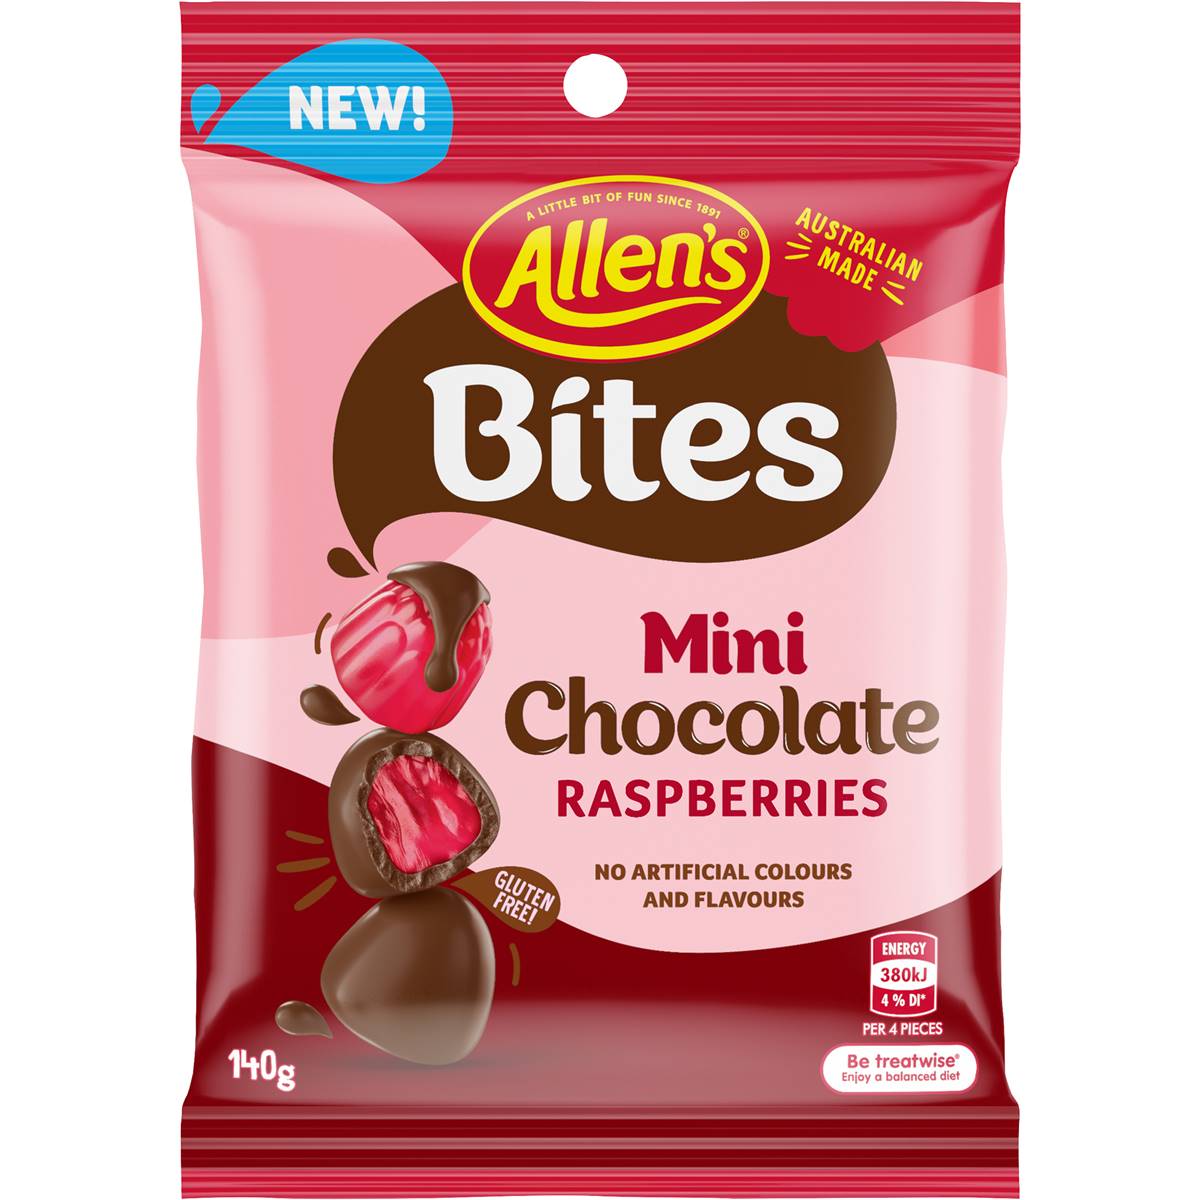 Calories in Allen's Bites Mini Chocolate Coated Raspberries